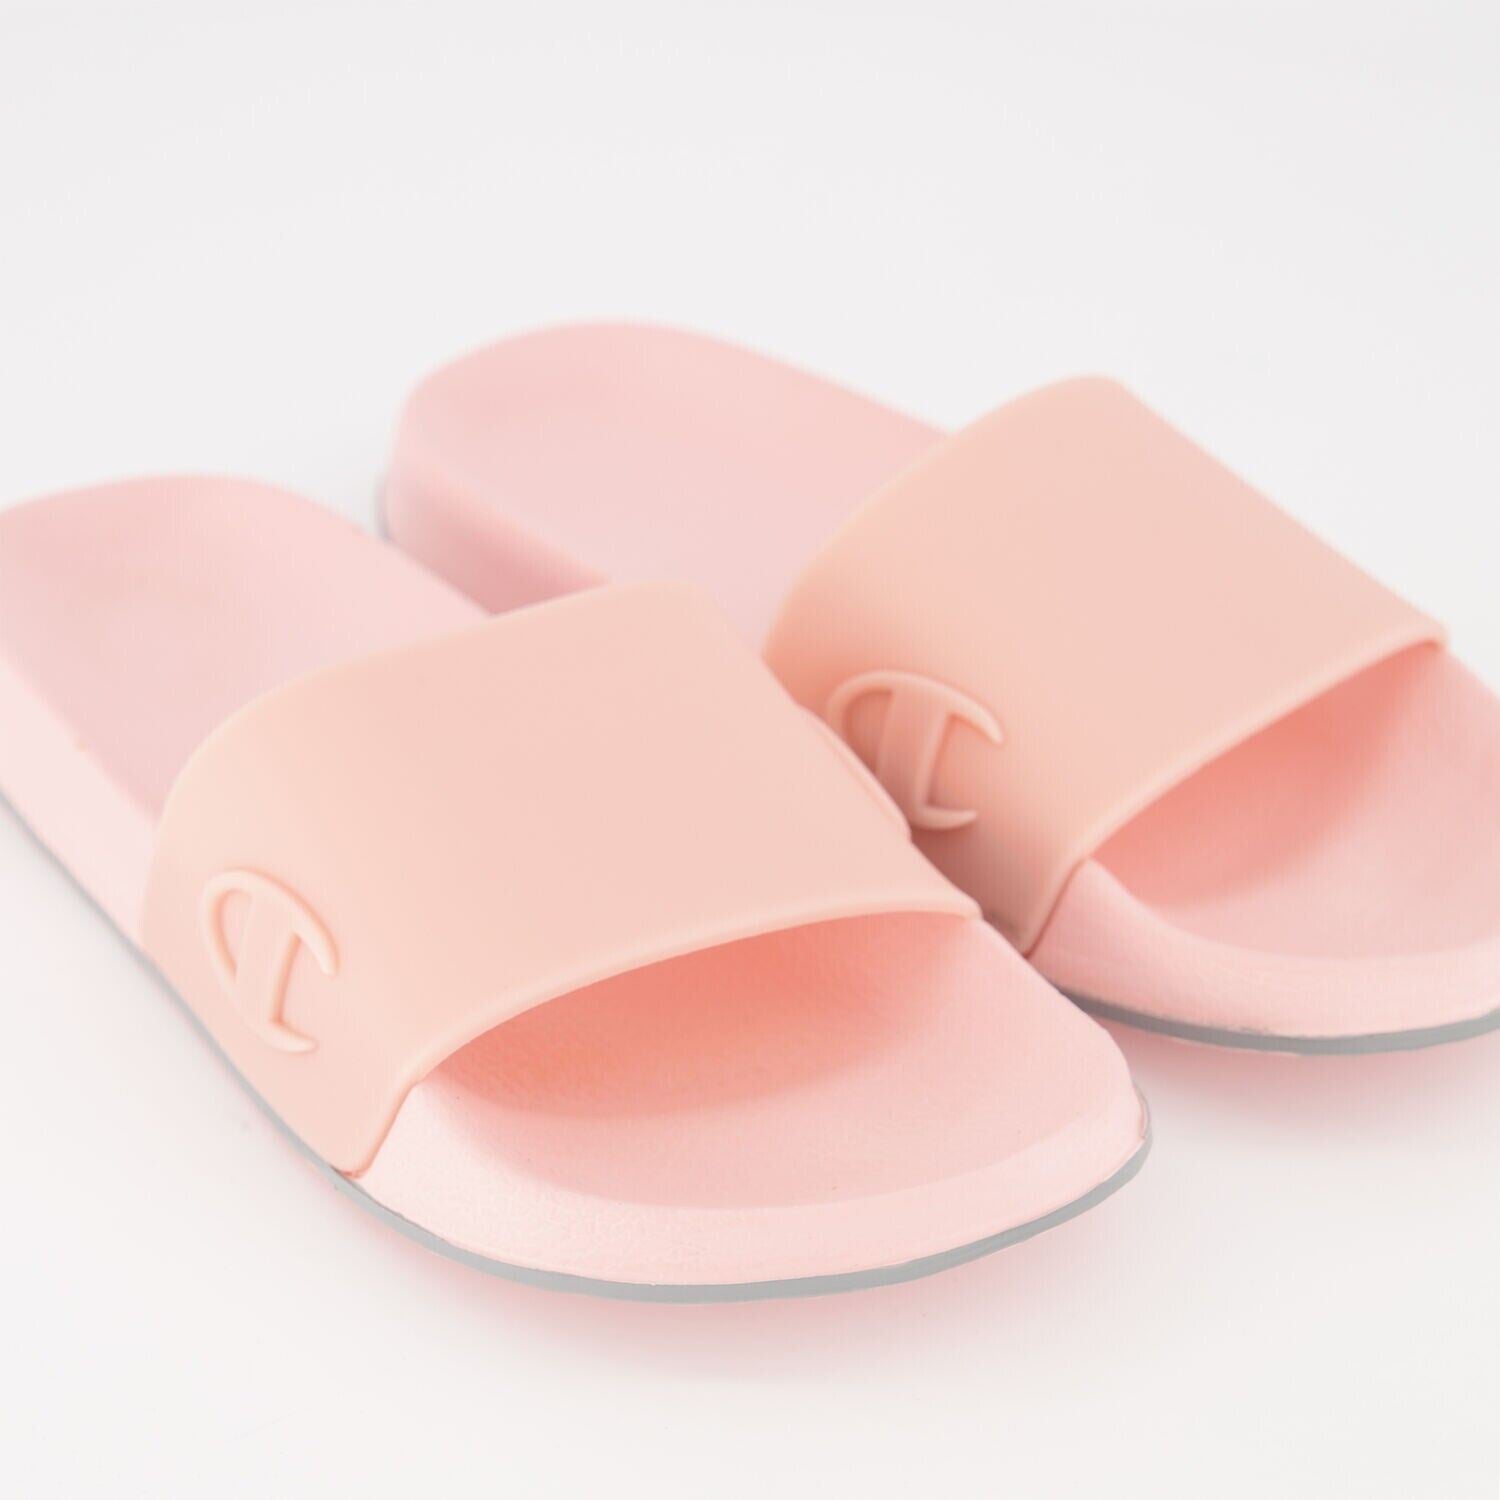 CHAMPION - CAMERON Womens Pool Sliders Summer Sandals, Light Pink, size UK 4